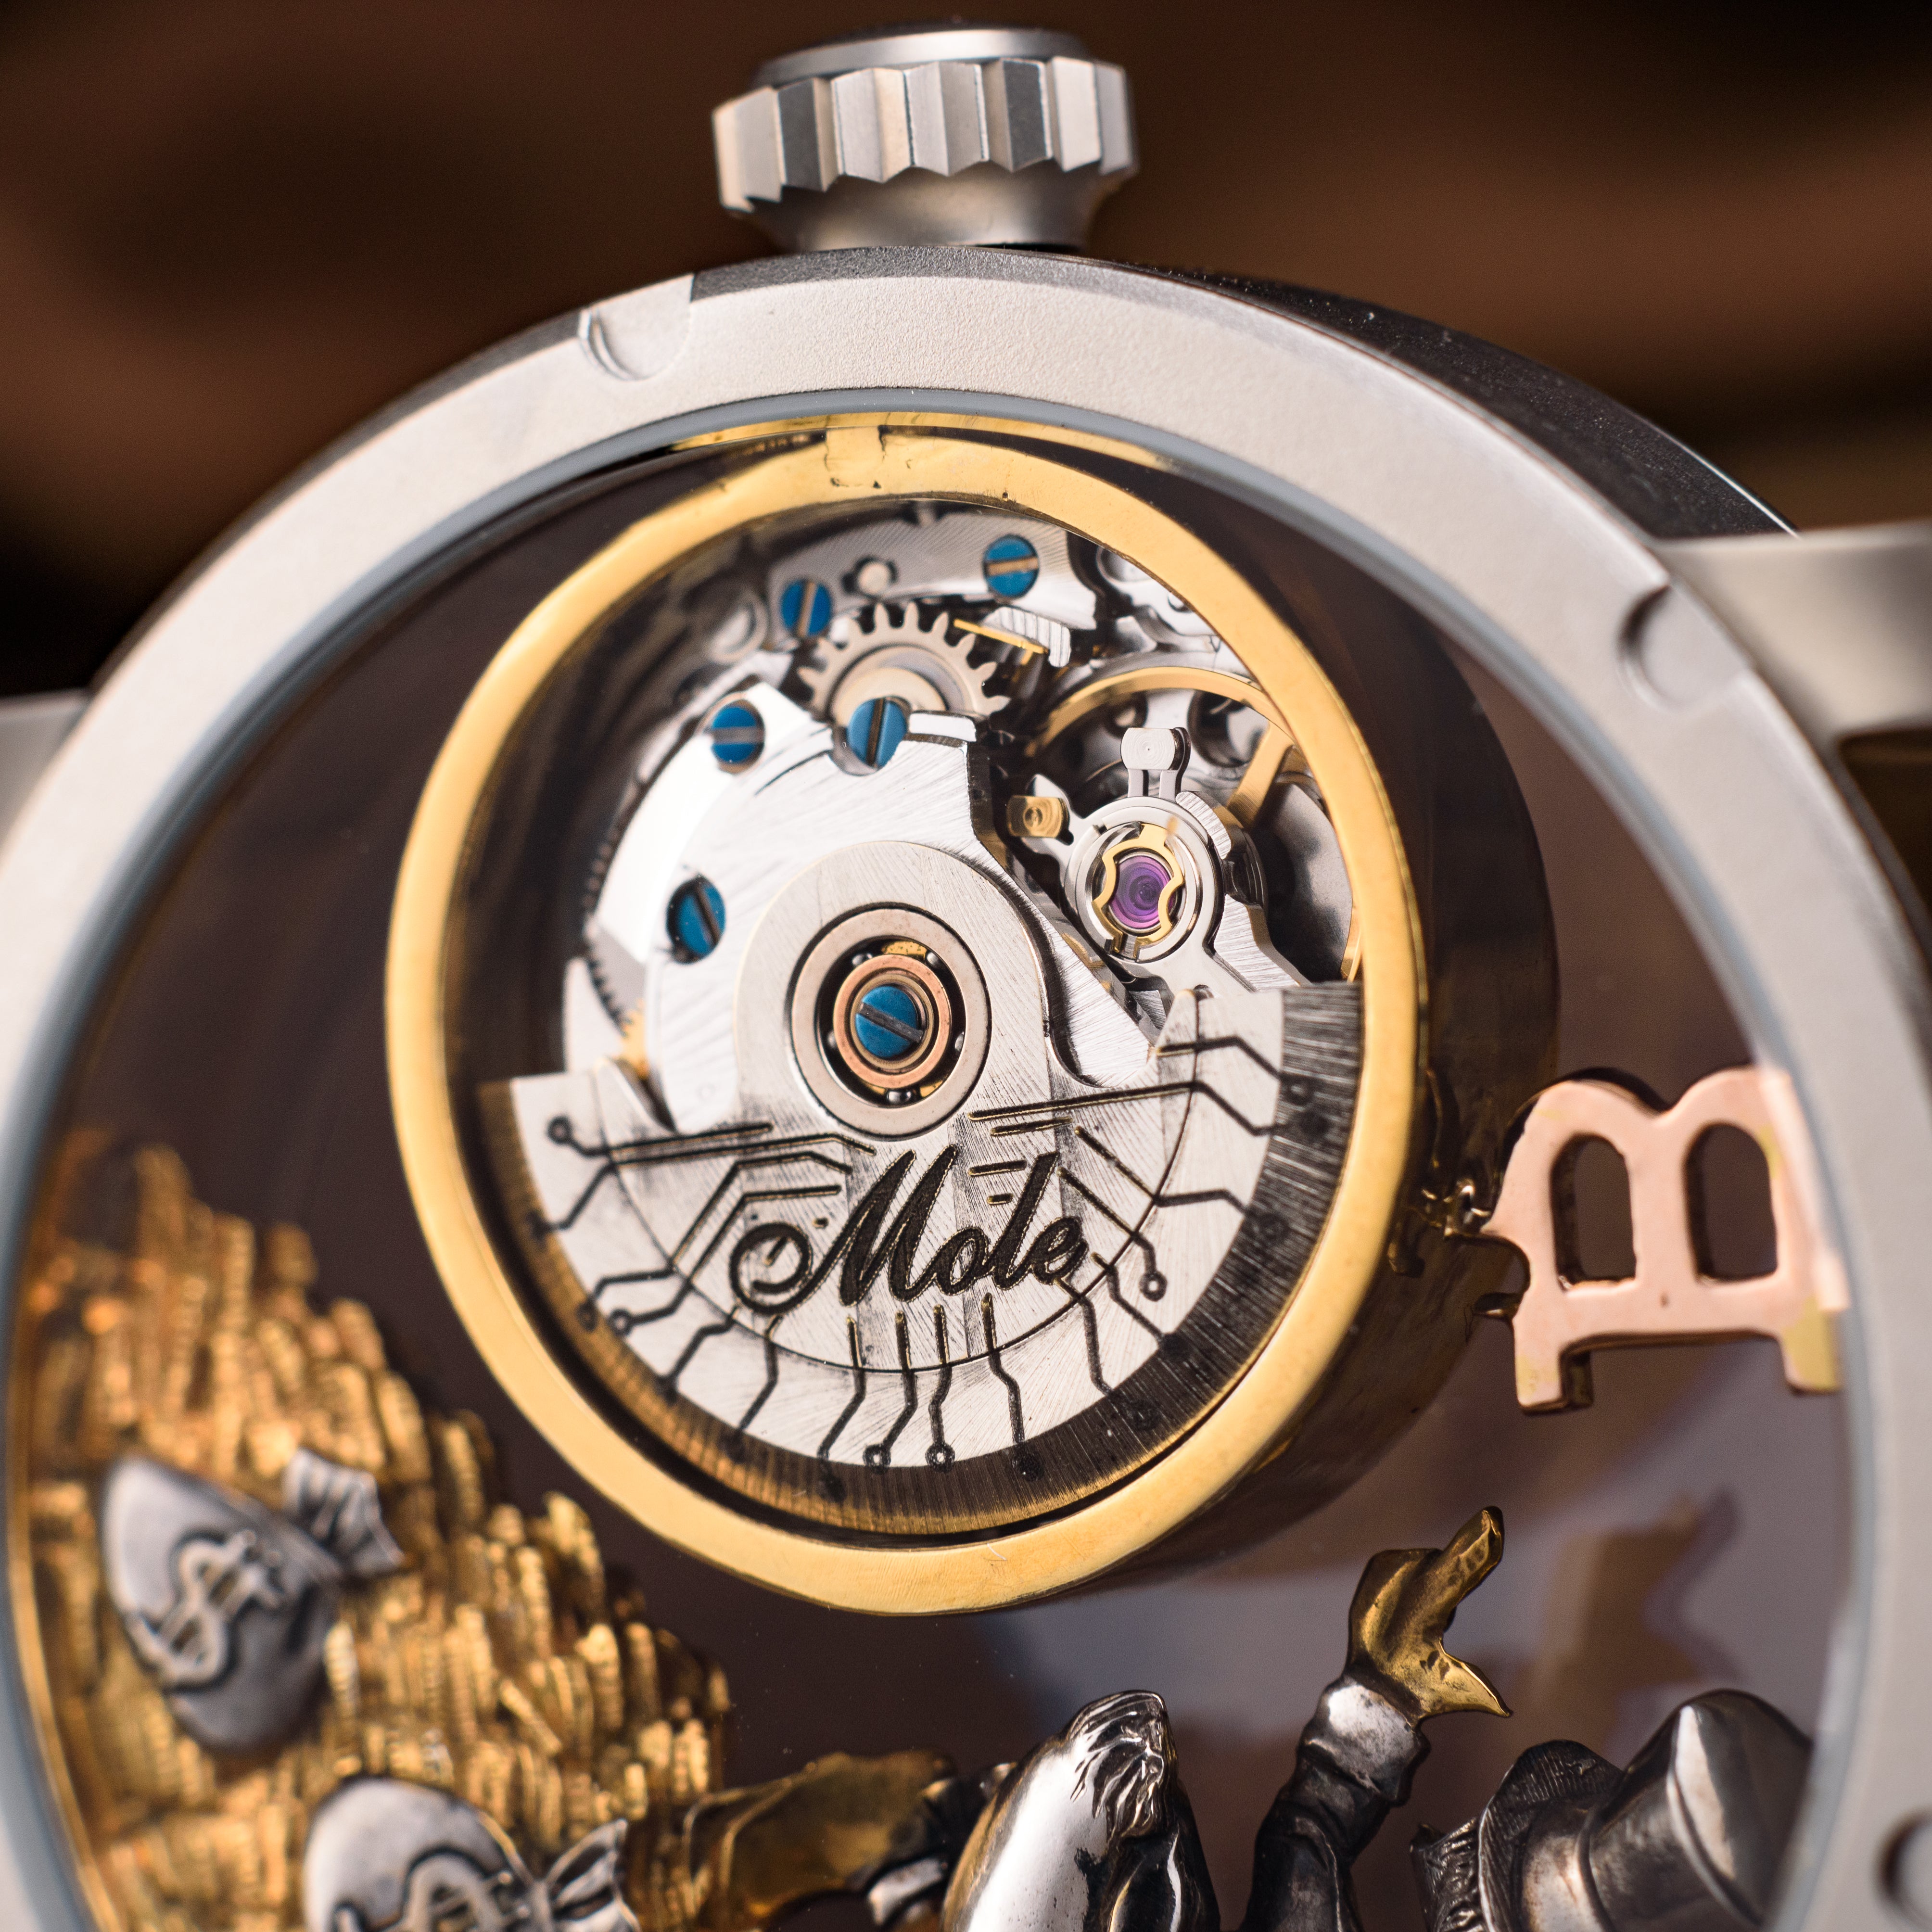 Mole - Bitcoin of Uncle Scrooge, ETA 2671 automatic, 3D skeleton wristwatch